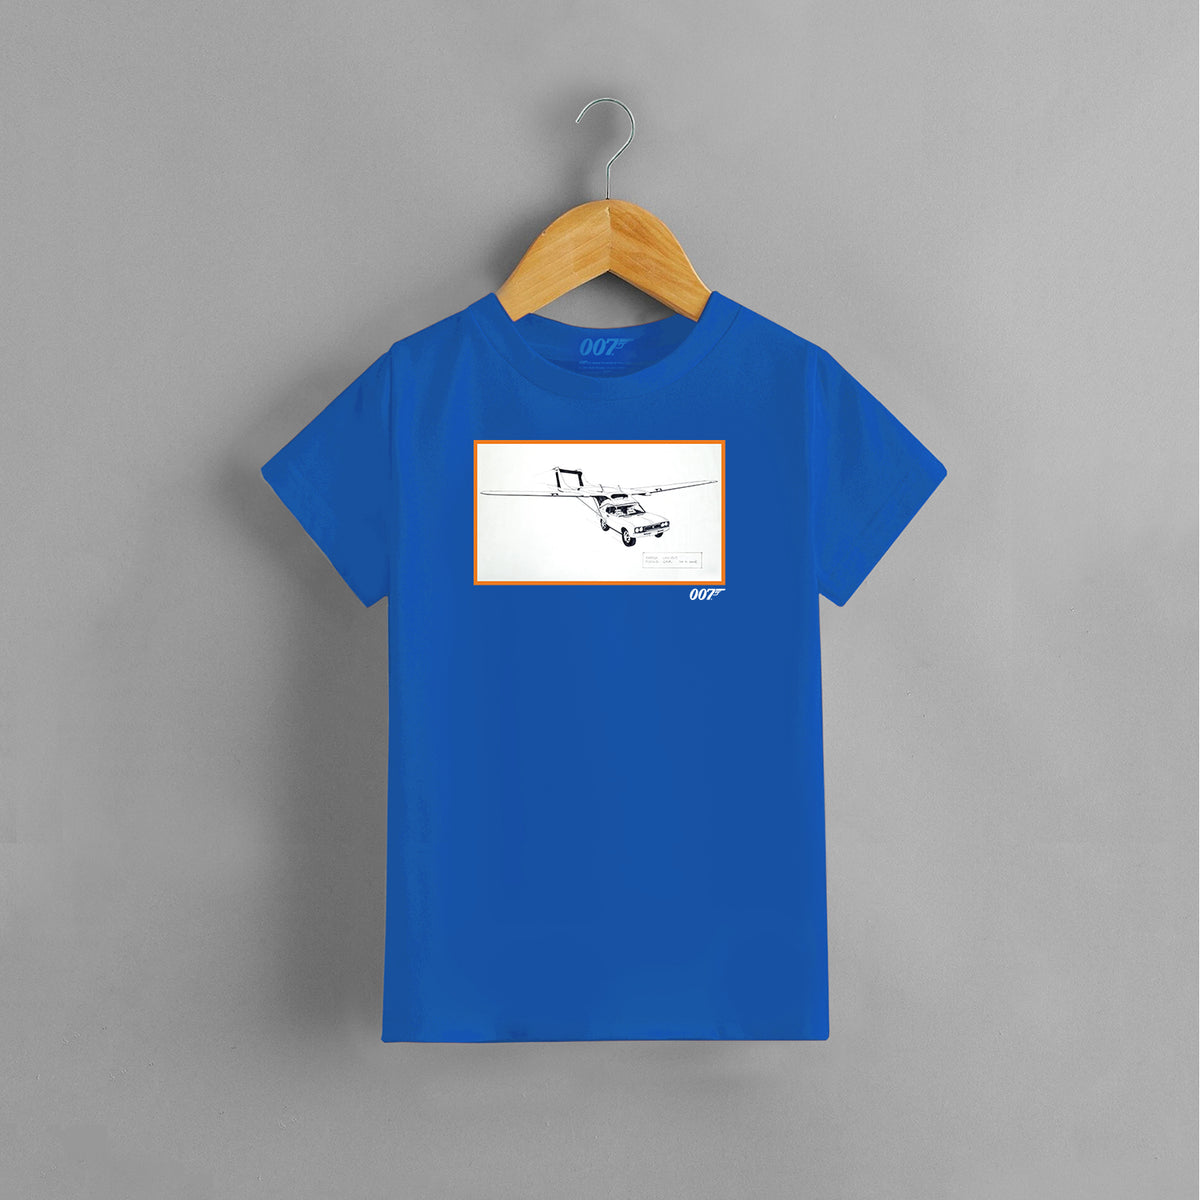 James Bond Kid/Teen Flying Car T-Shirt (6 colours)